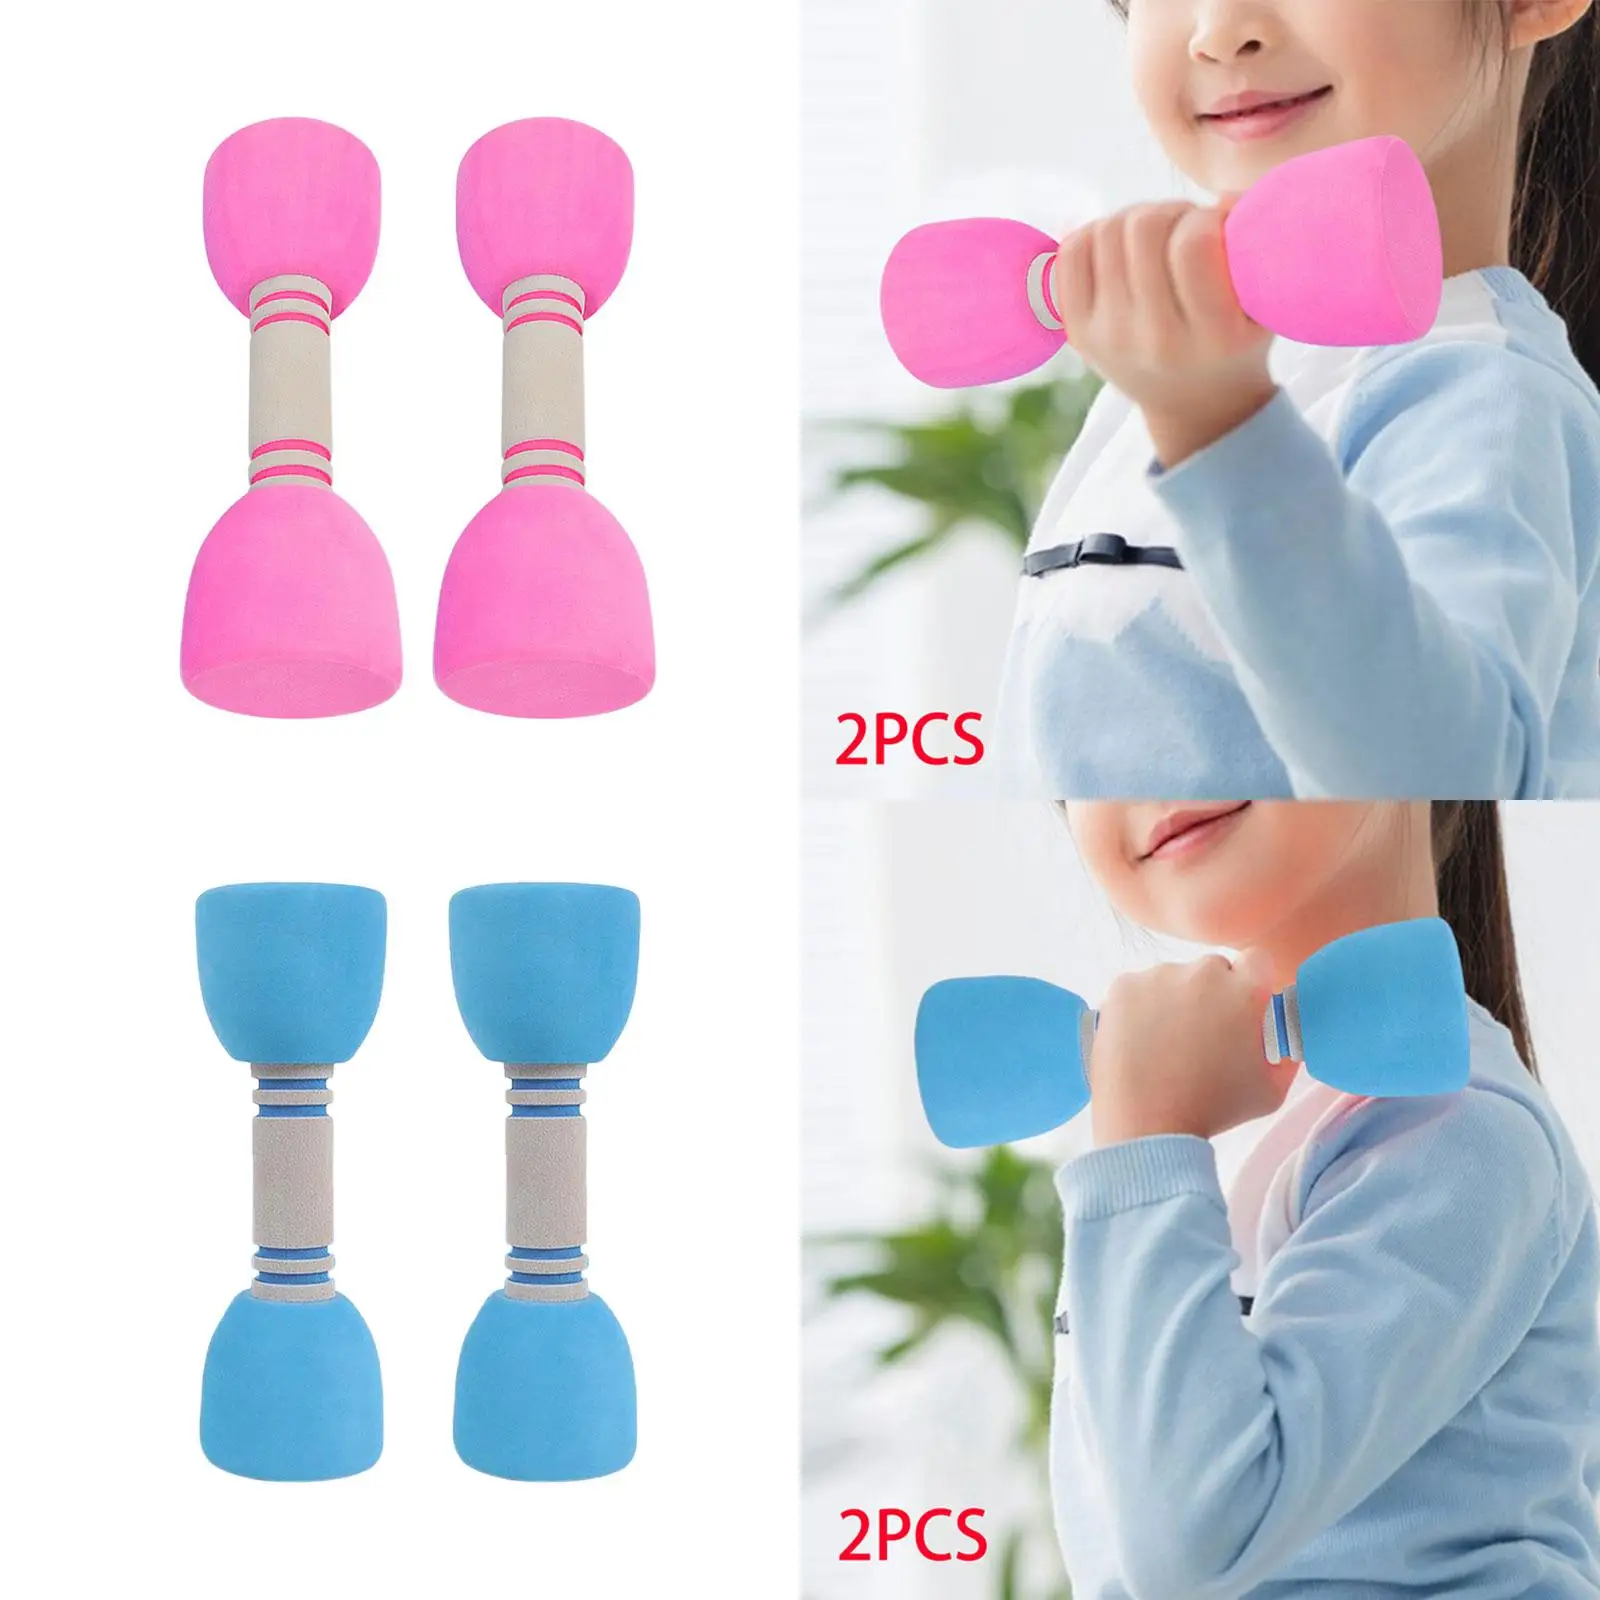 2x Kids Dumbbells Non Slip Equipment Sport Toy Children Barbell Exercise Dumbells for Sports Home Gym Fitness Workouts Girls